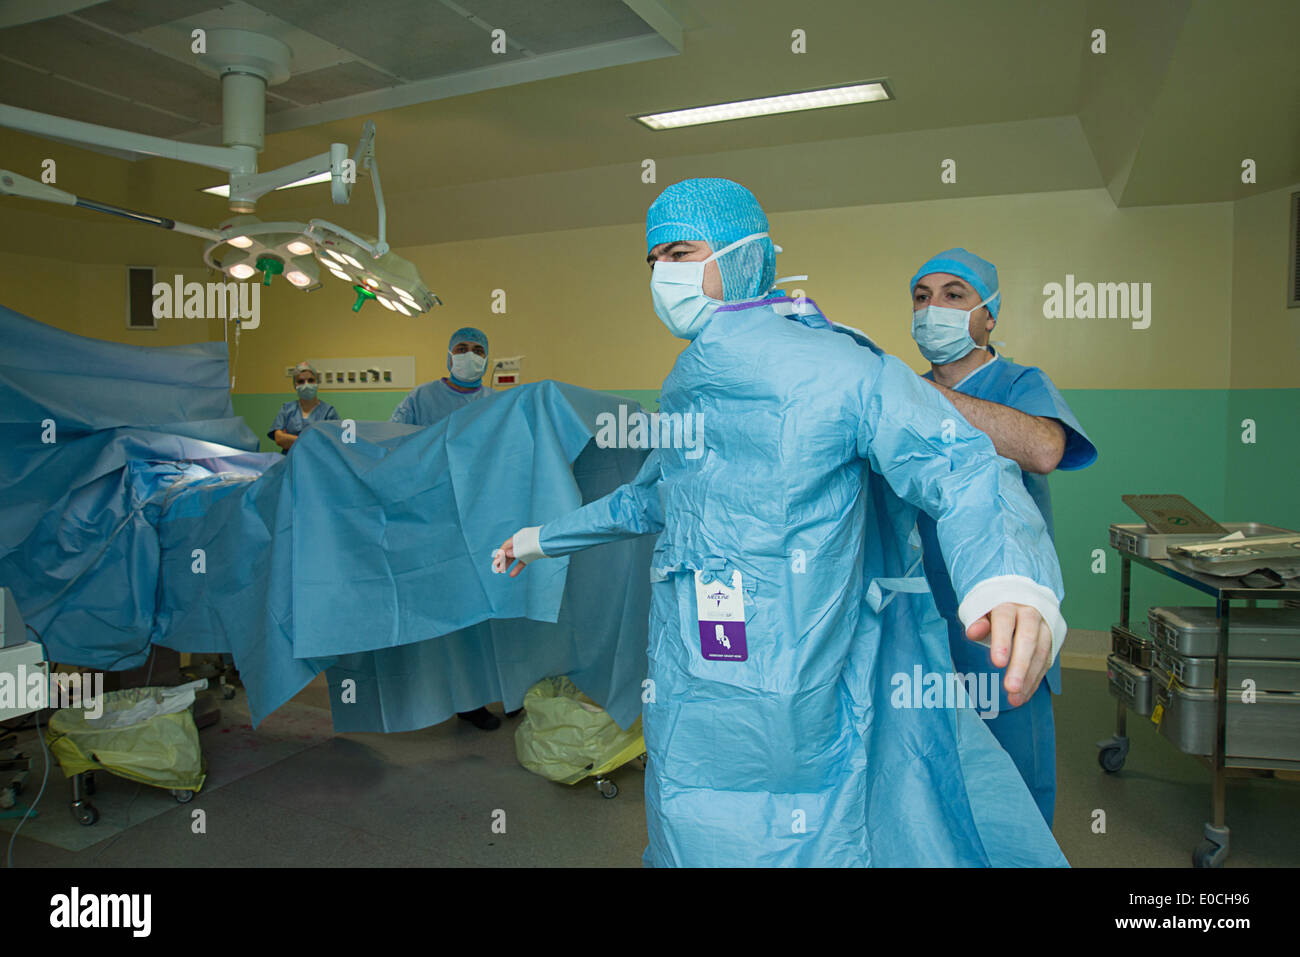 Hip prosthesis, surgery Stock Photo